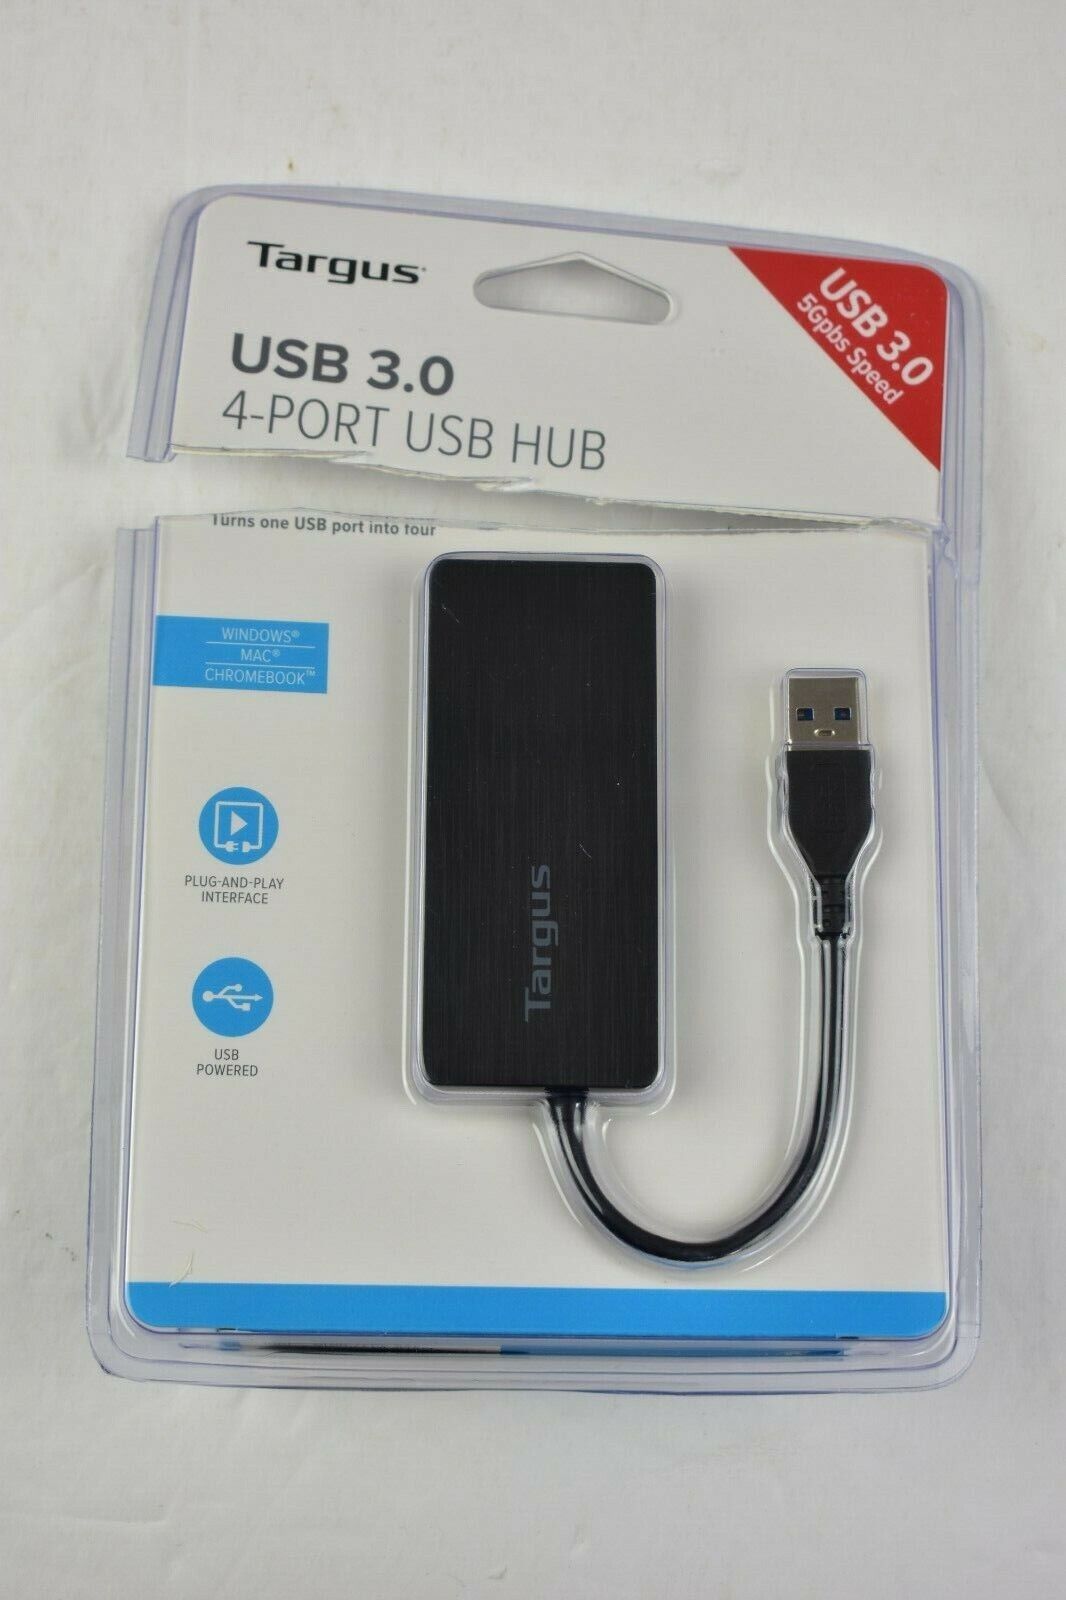 Targus USB 3.0 4-Port USB Hub Plug and Play Interface 5gpbs Speed 